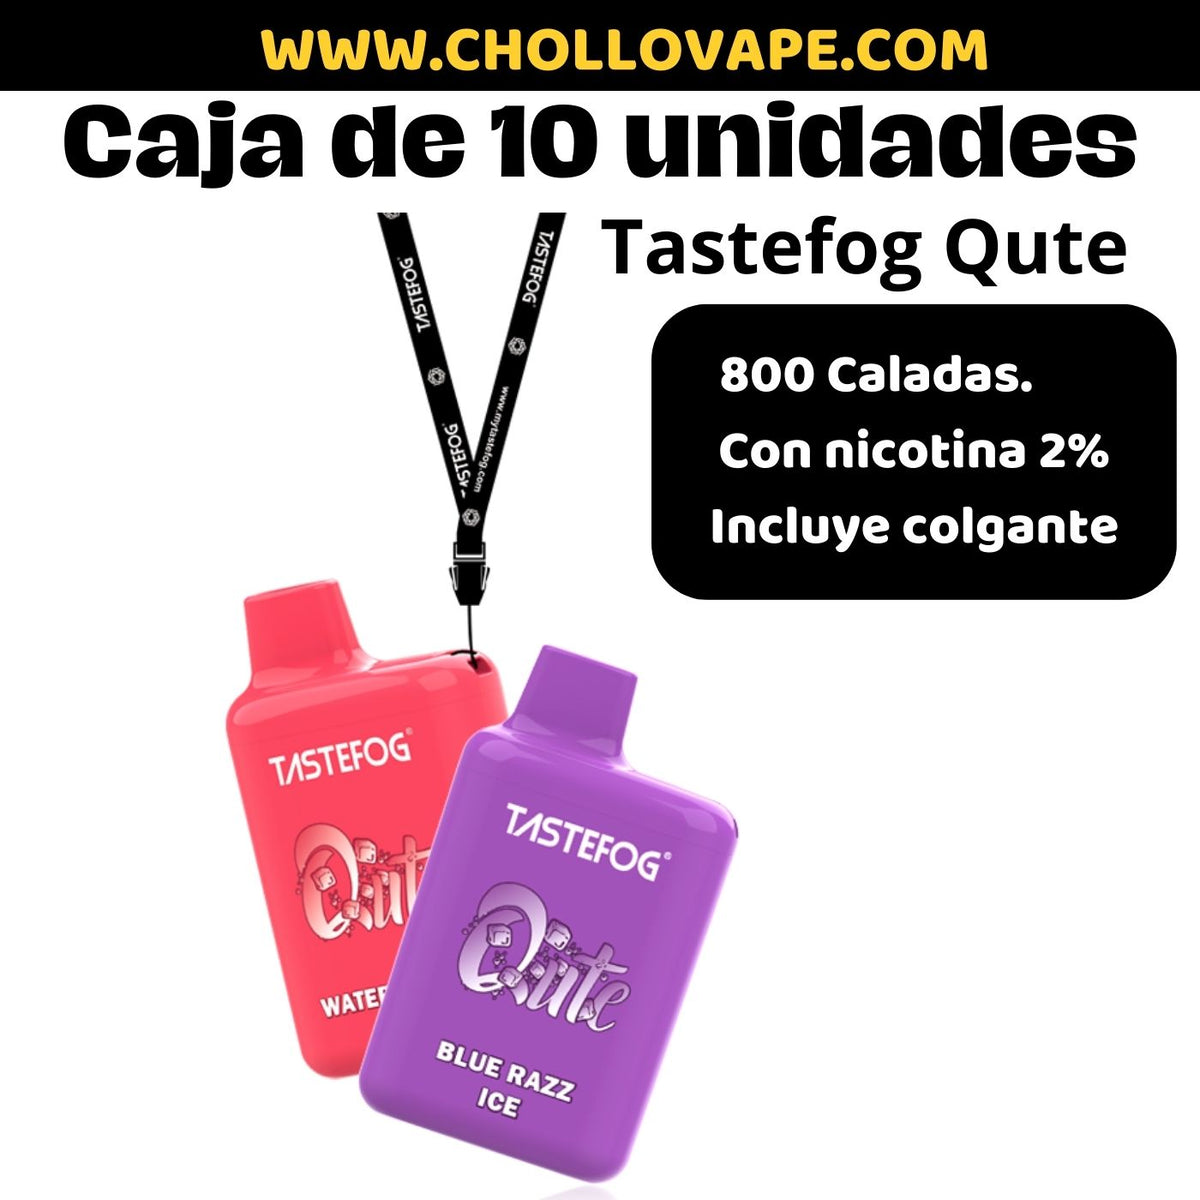 Caja Tastefog Qute 800 Caladas con Nicotina 2% (10 Unidades) – Chollovape